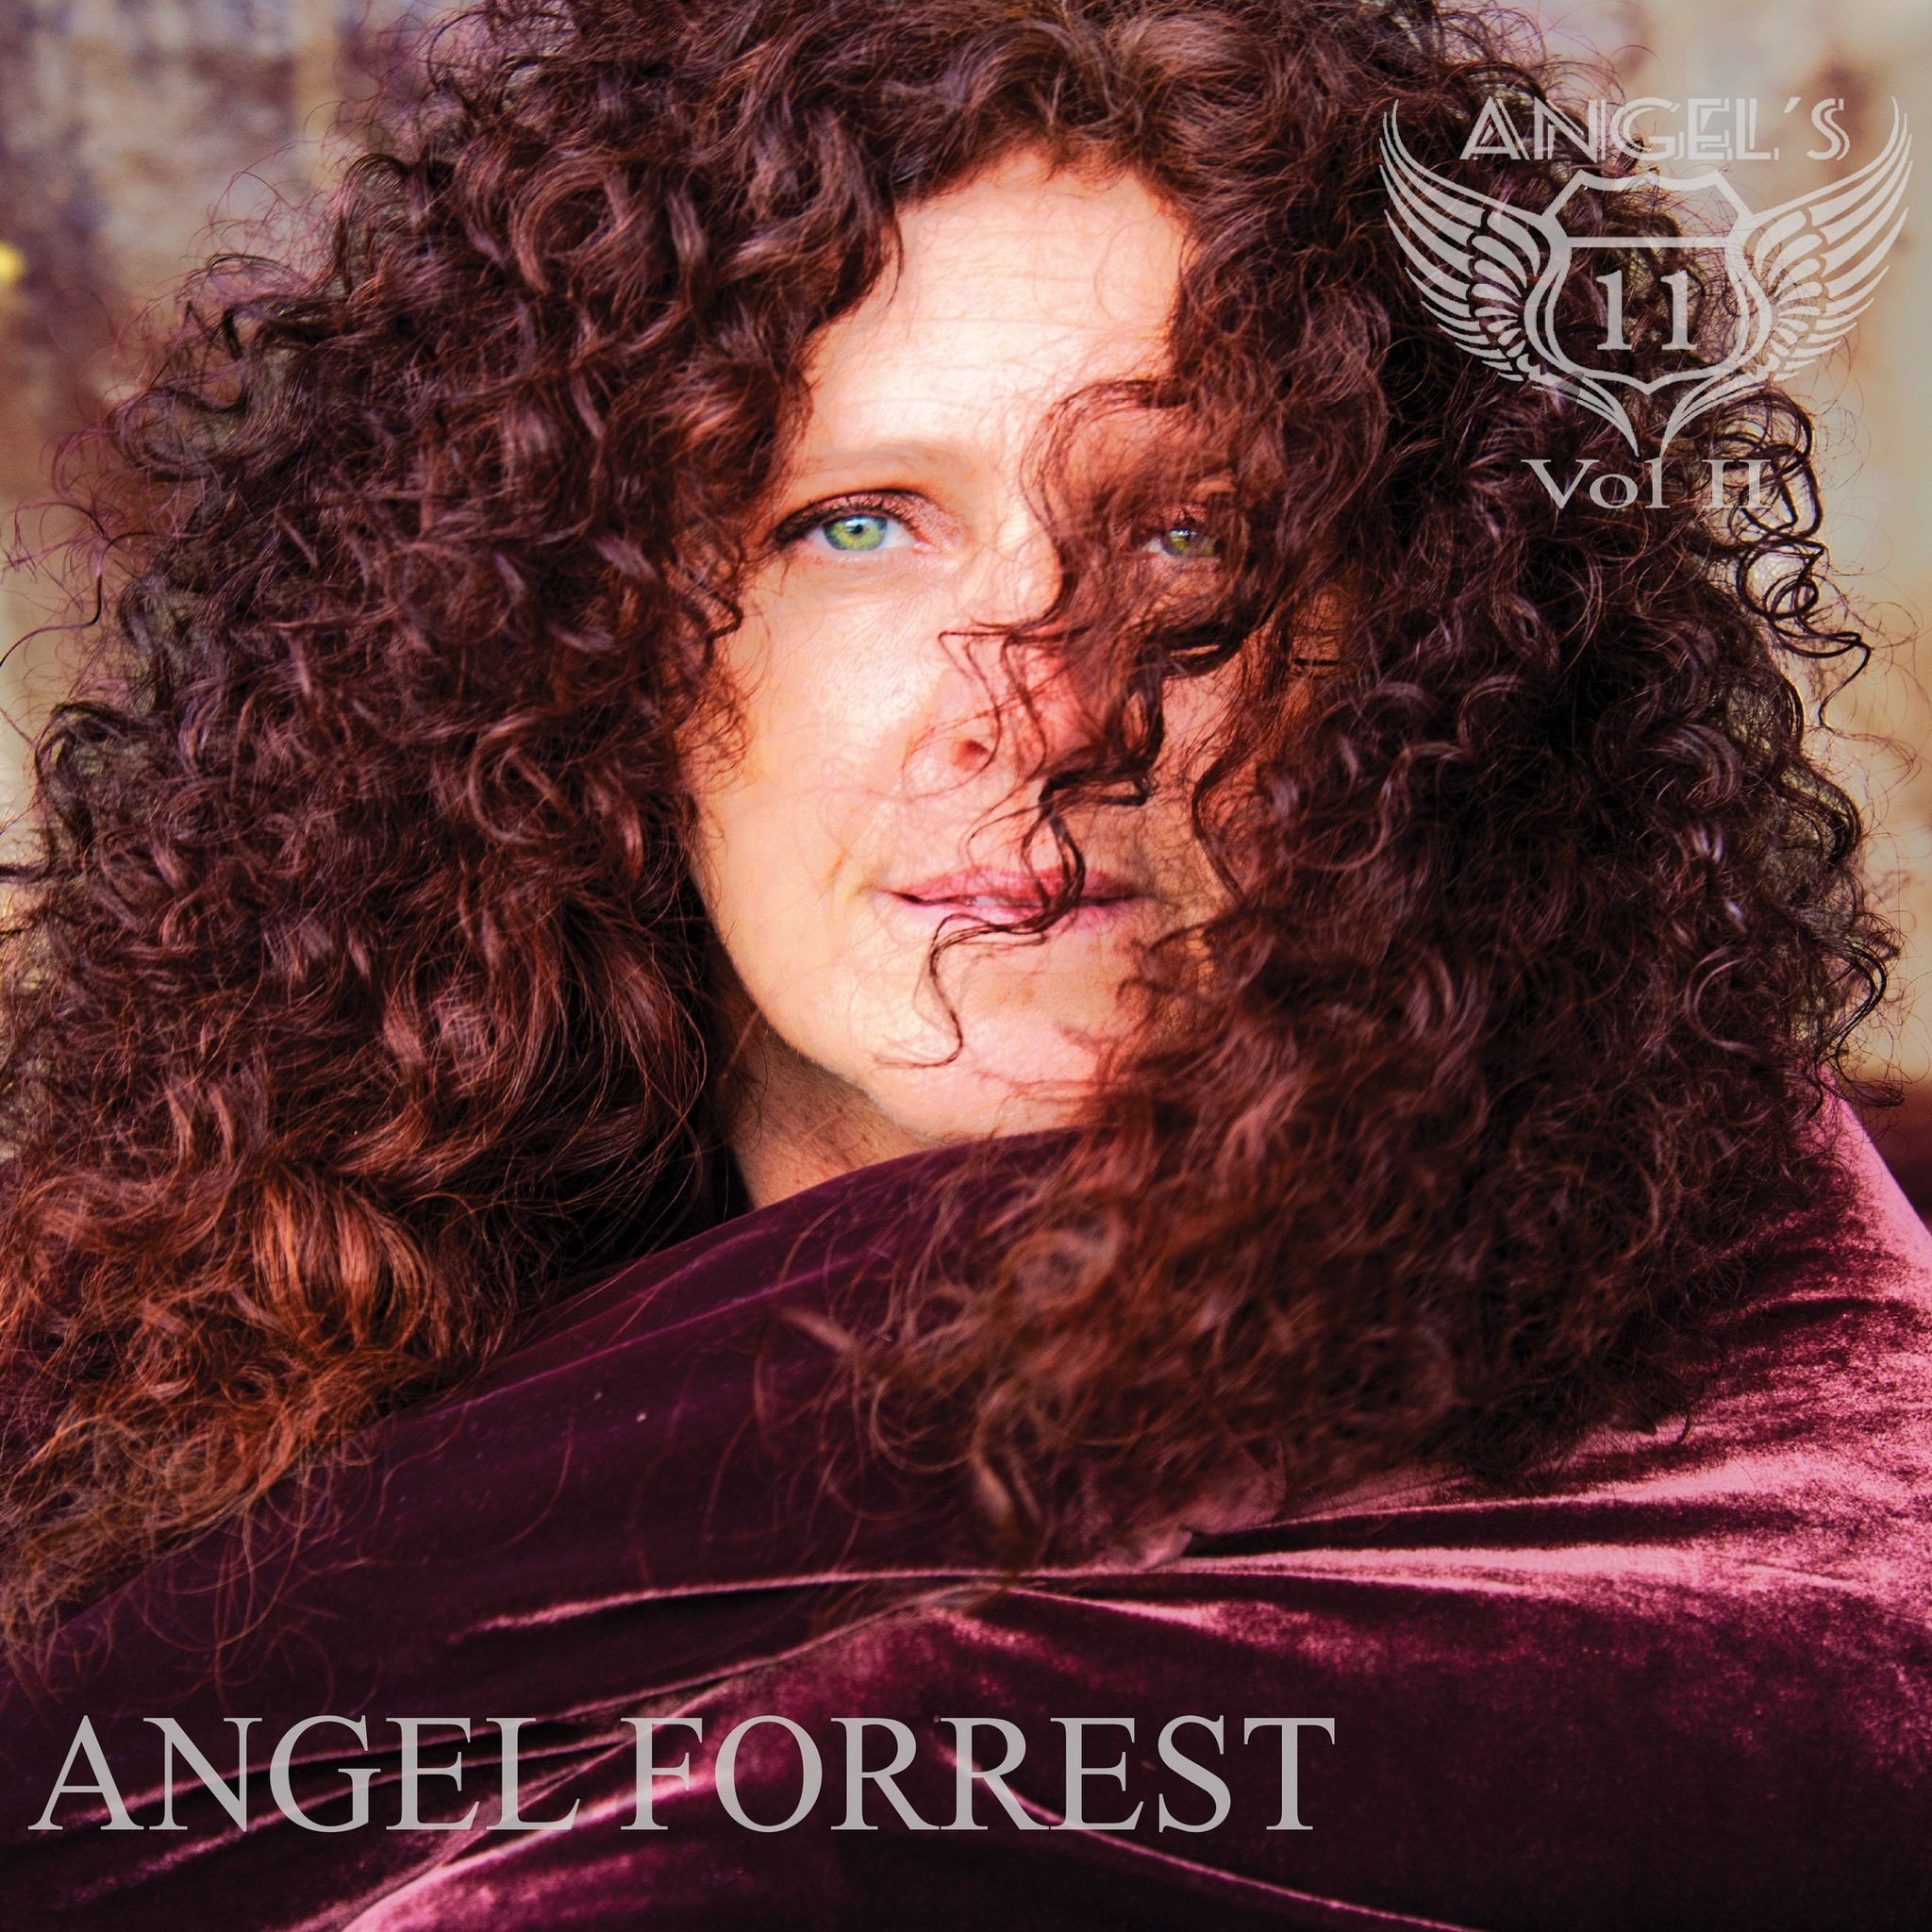 Angel Forrest - Angel’s 11 Vol II